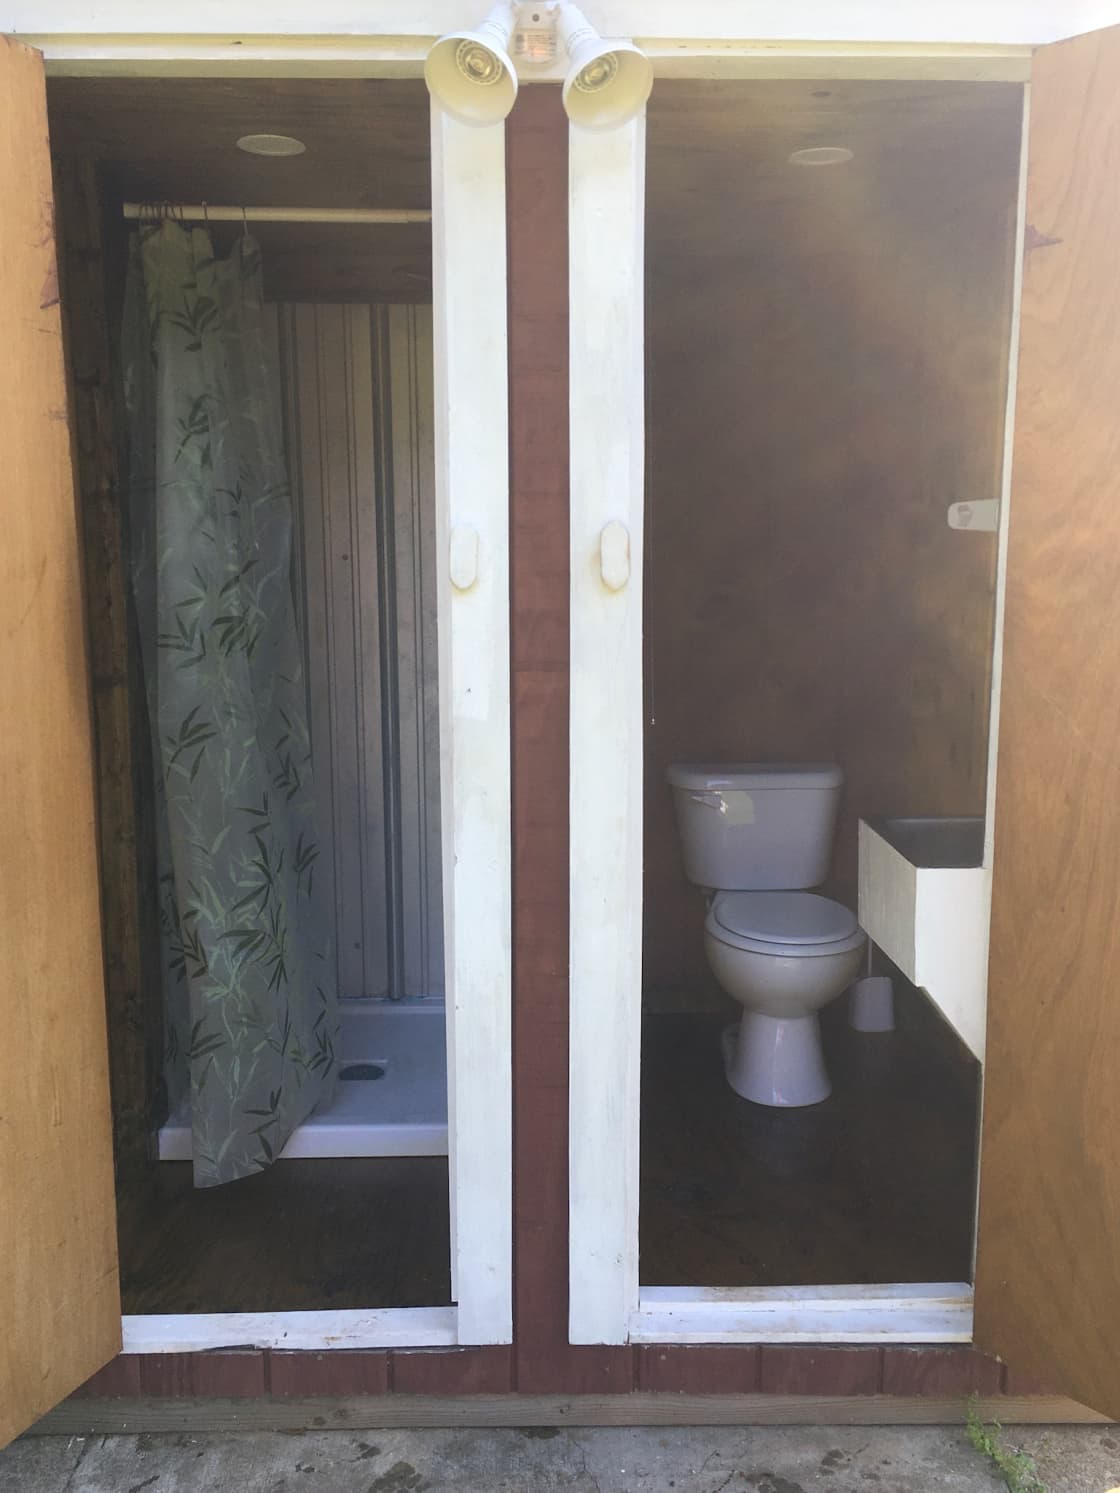 Shower house and bathroom